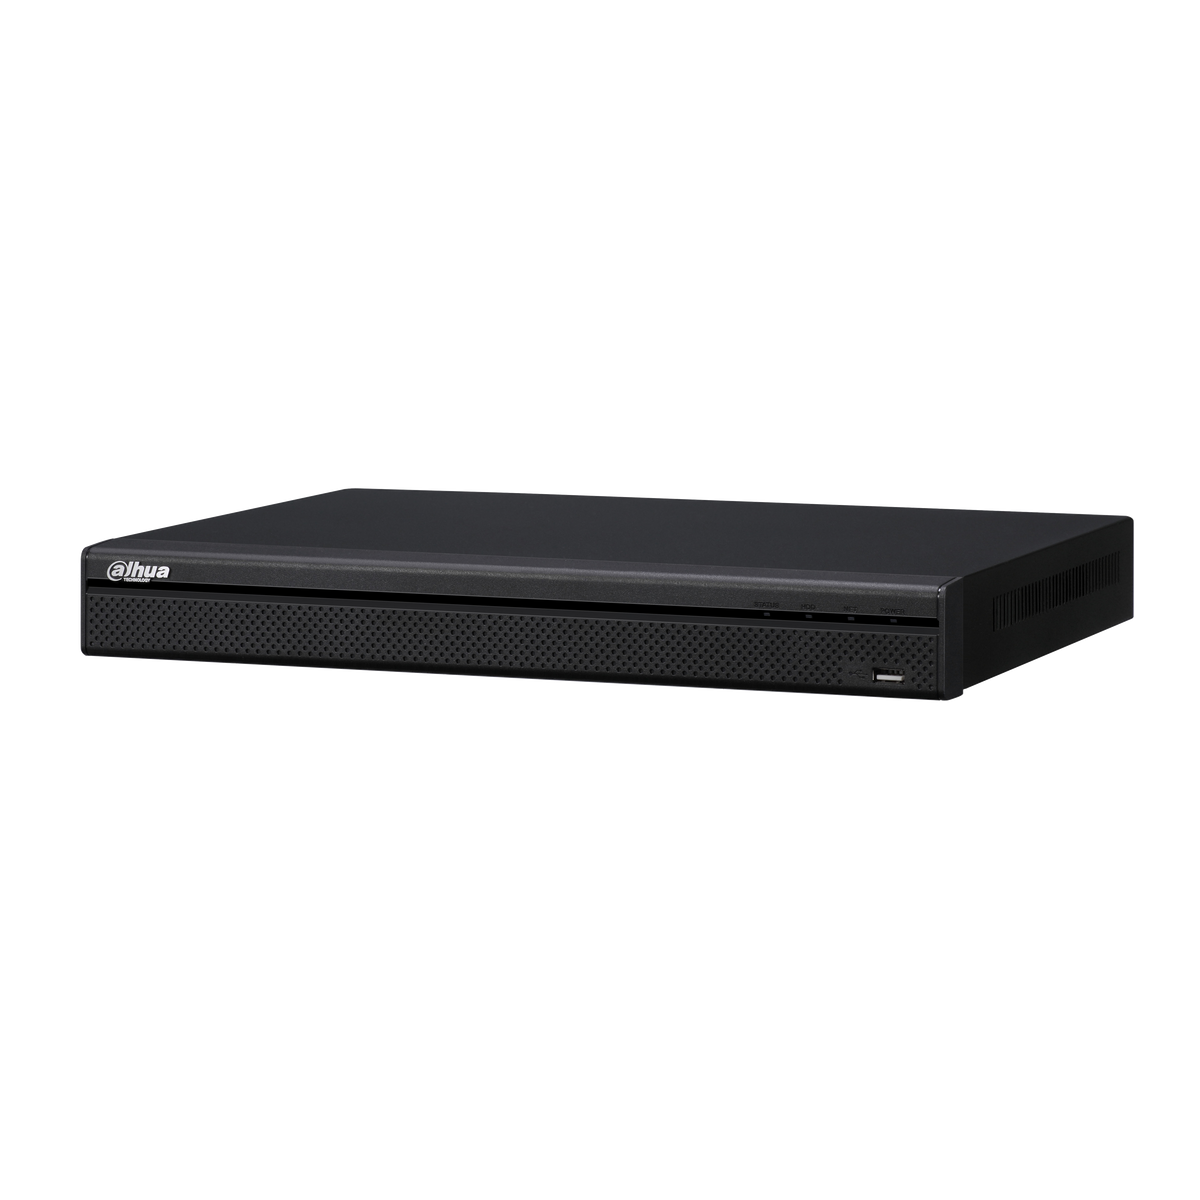 DAHUA NVR4204-P-4KS2 4 Channel 1U 2HDDs 4PoE 4K & H.265 Lite Network Video Recorder